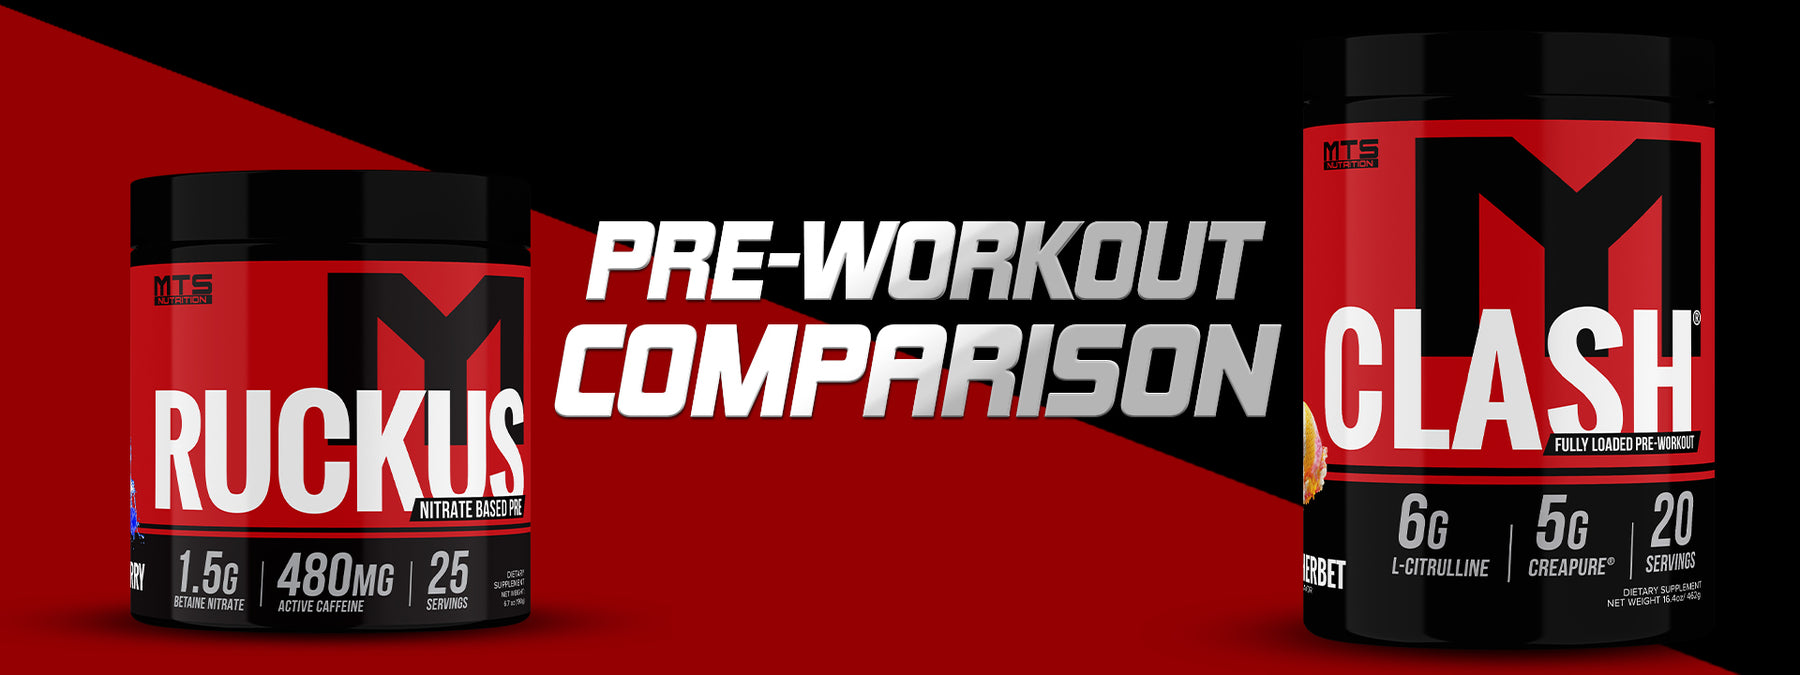 The MTS Pre-Workout Breakdown: Ruckus vs. Clash